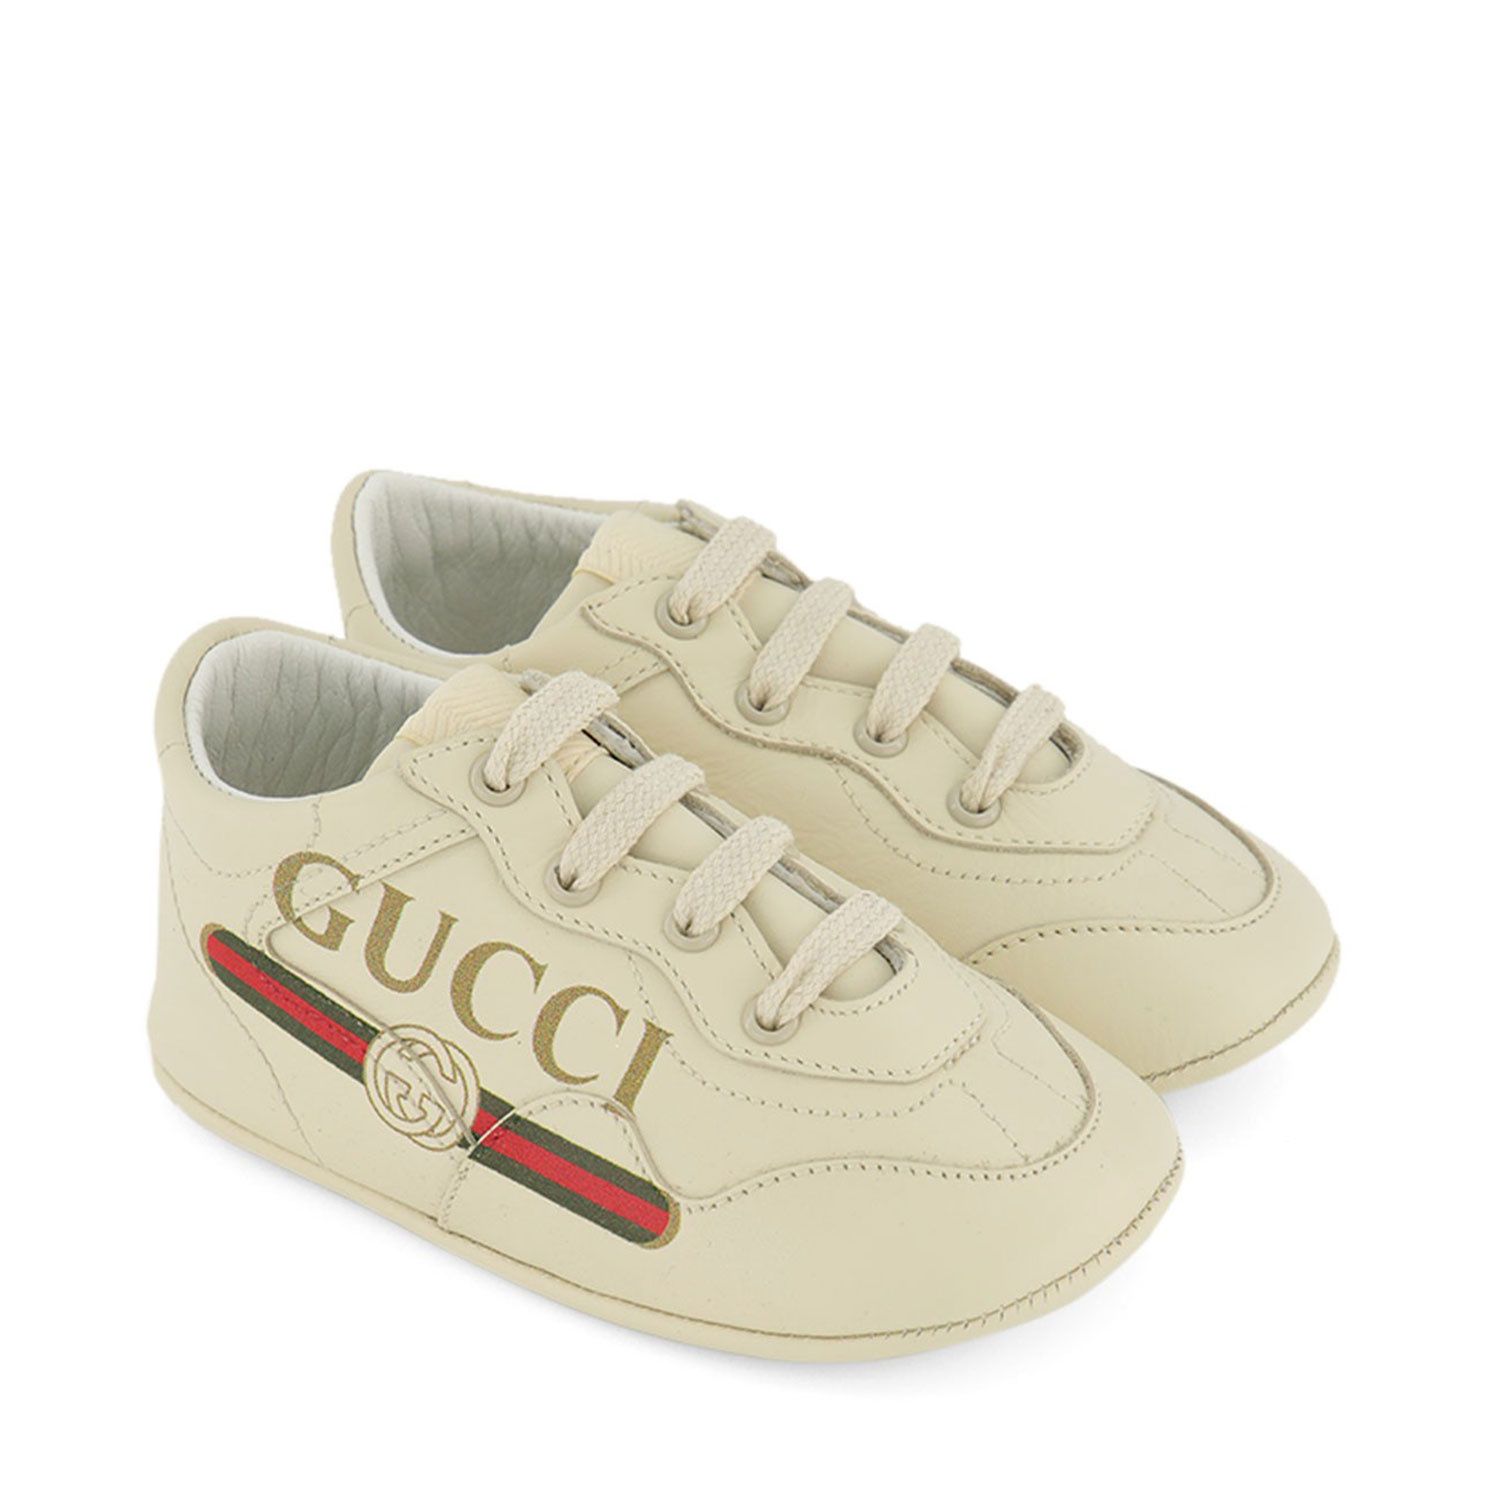 gucci mcdonalds shoes